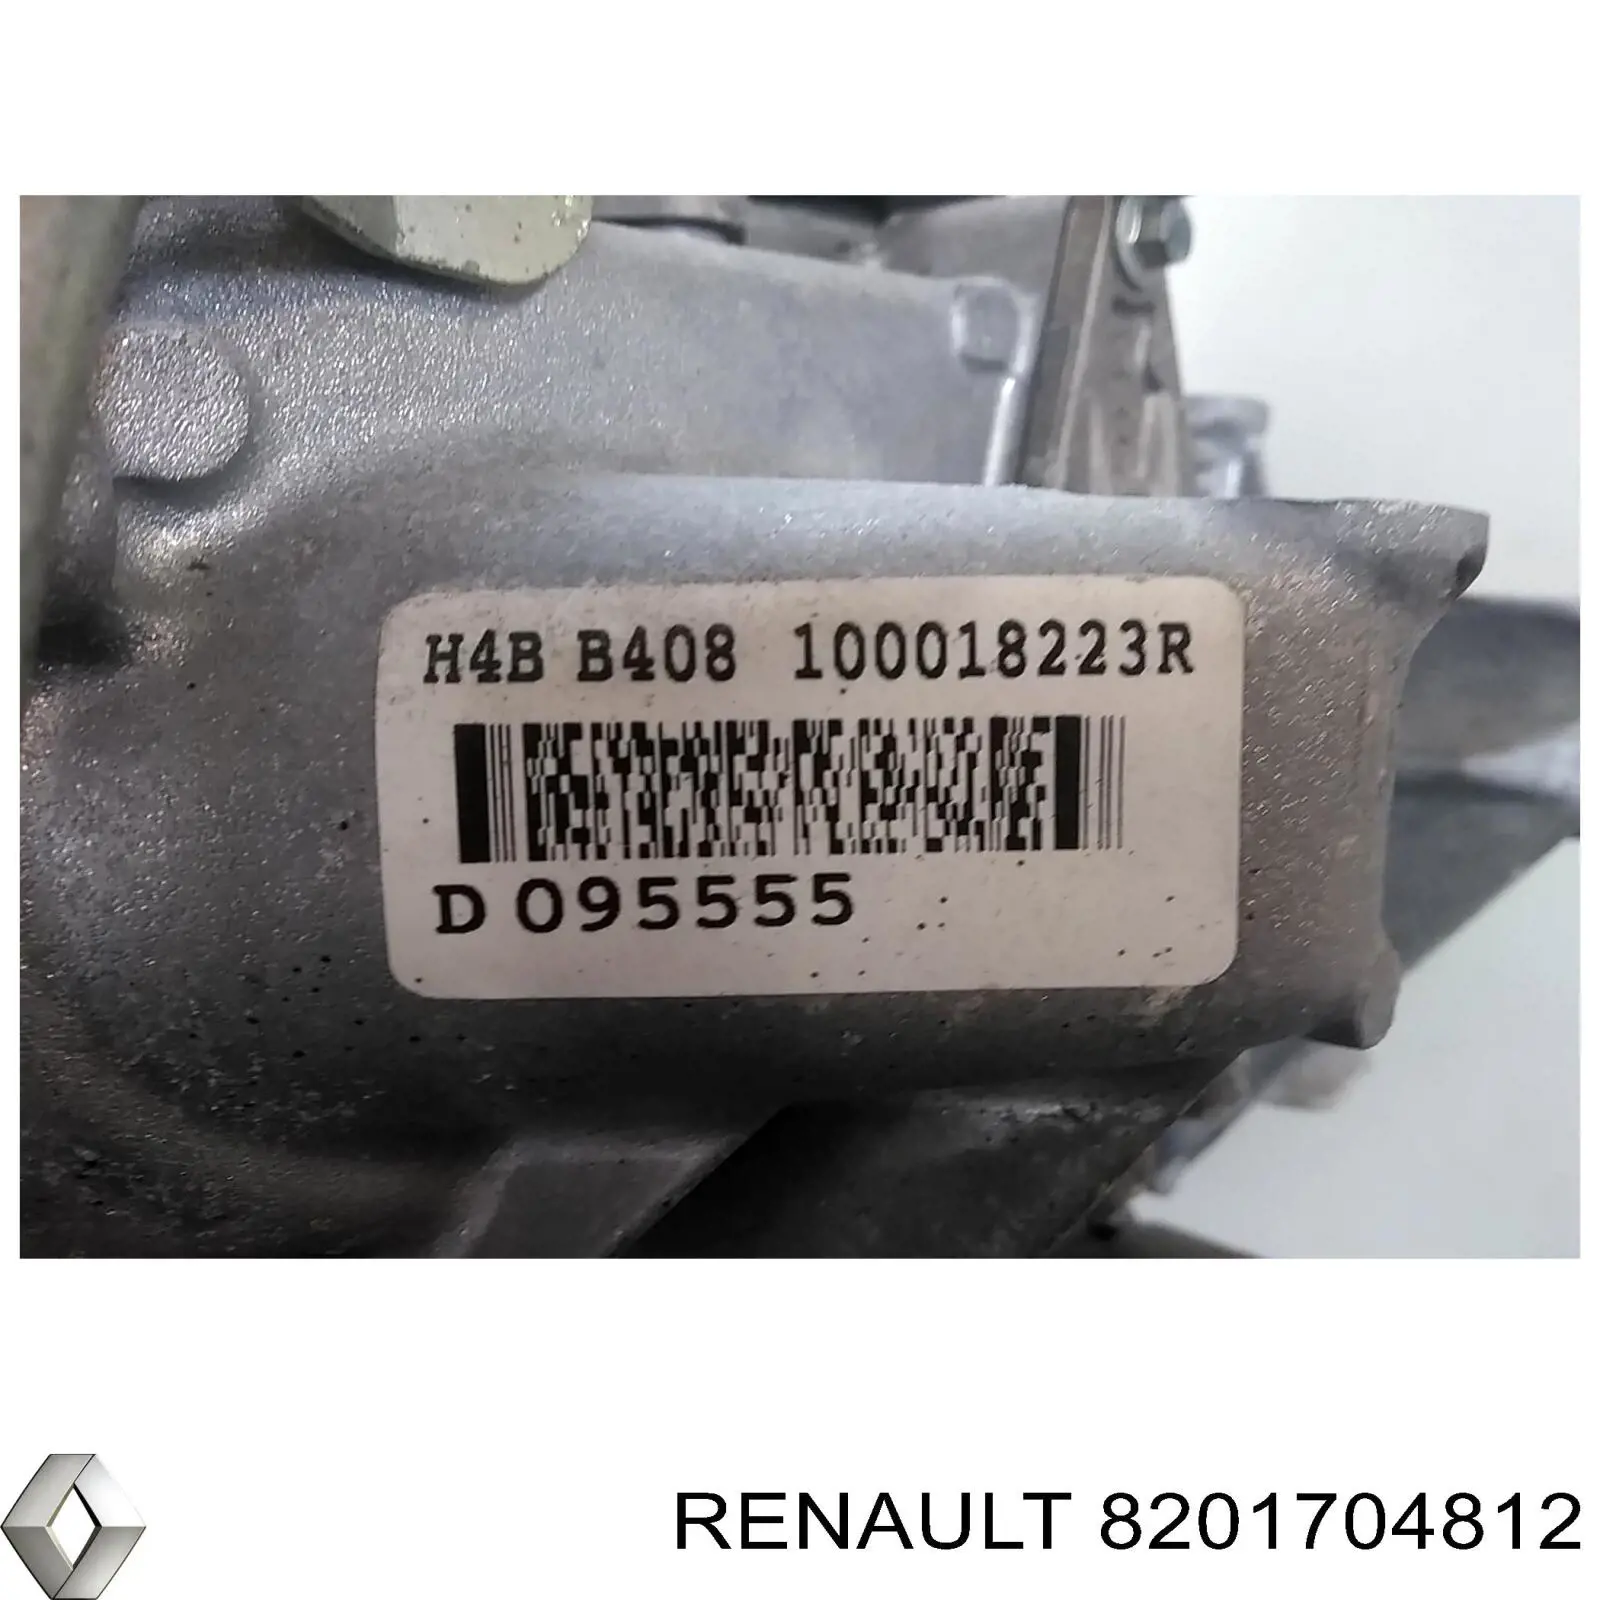 8201704812 Renault (RVI)